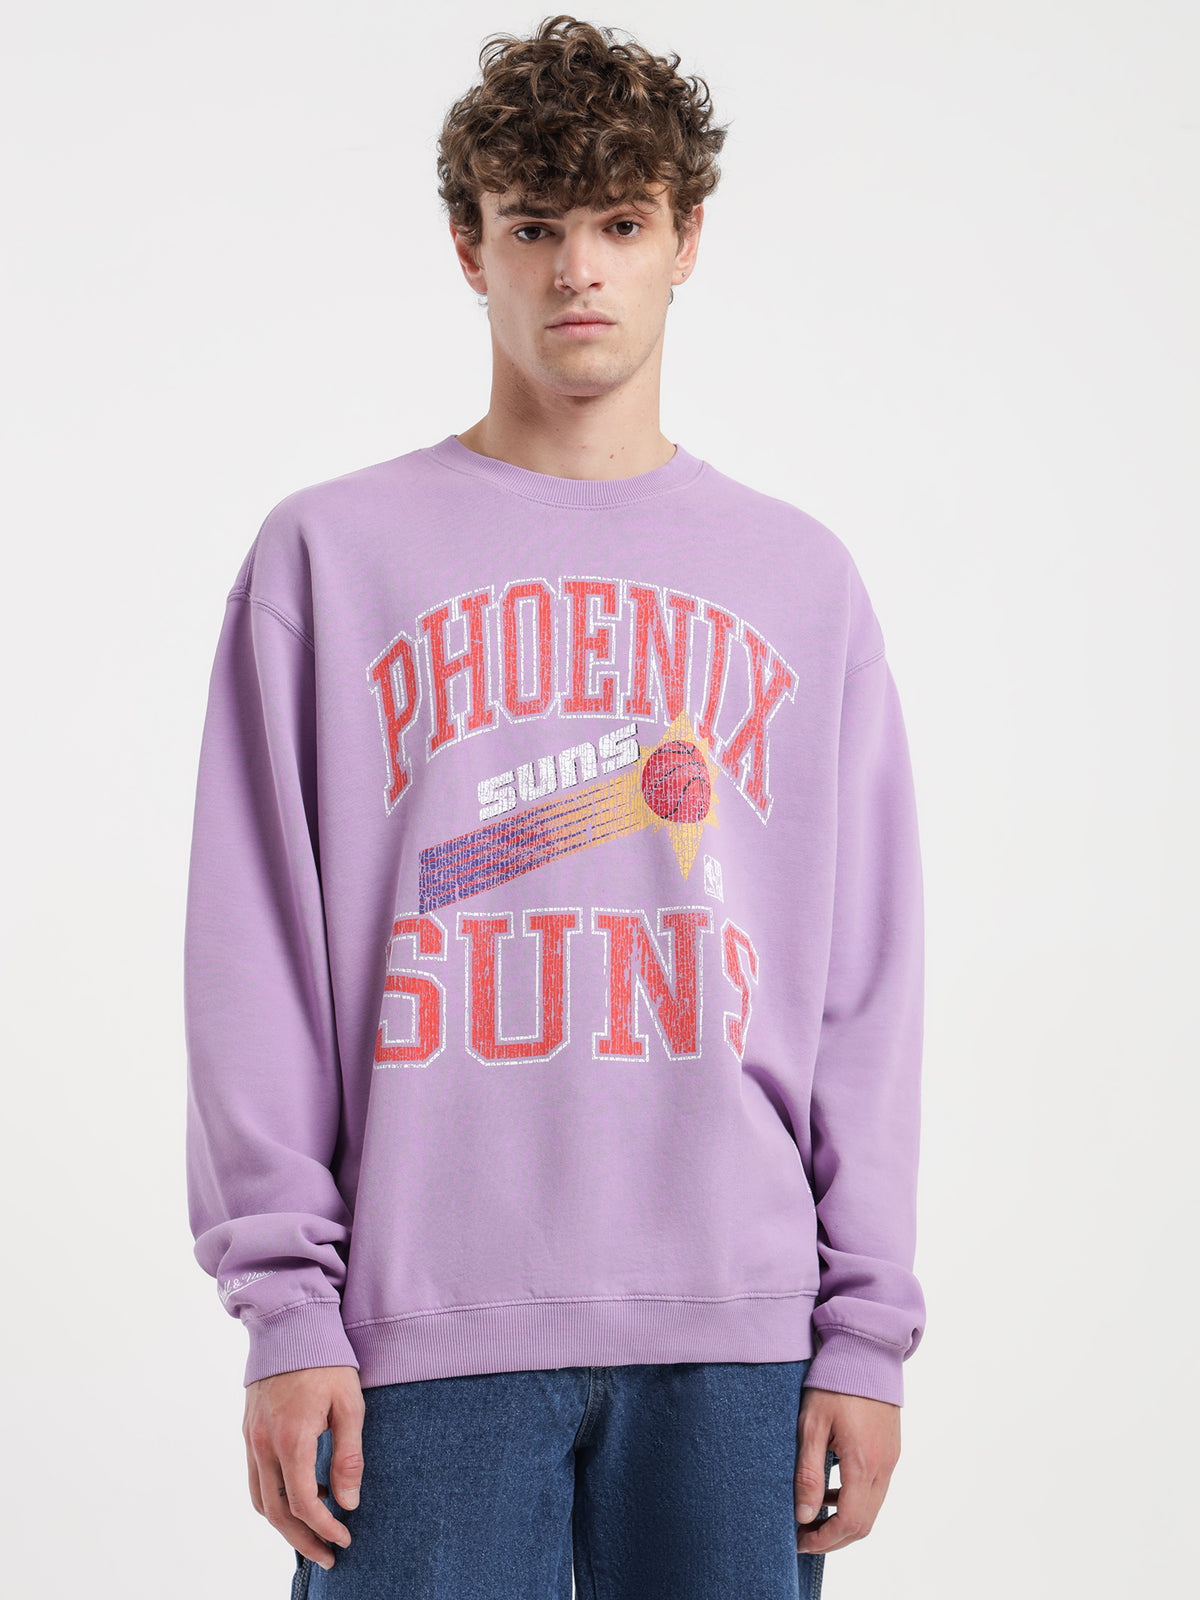 Phoenix Suns Crew Sweater in Purple